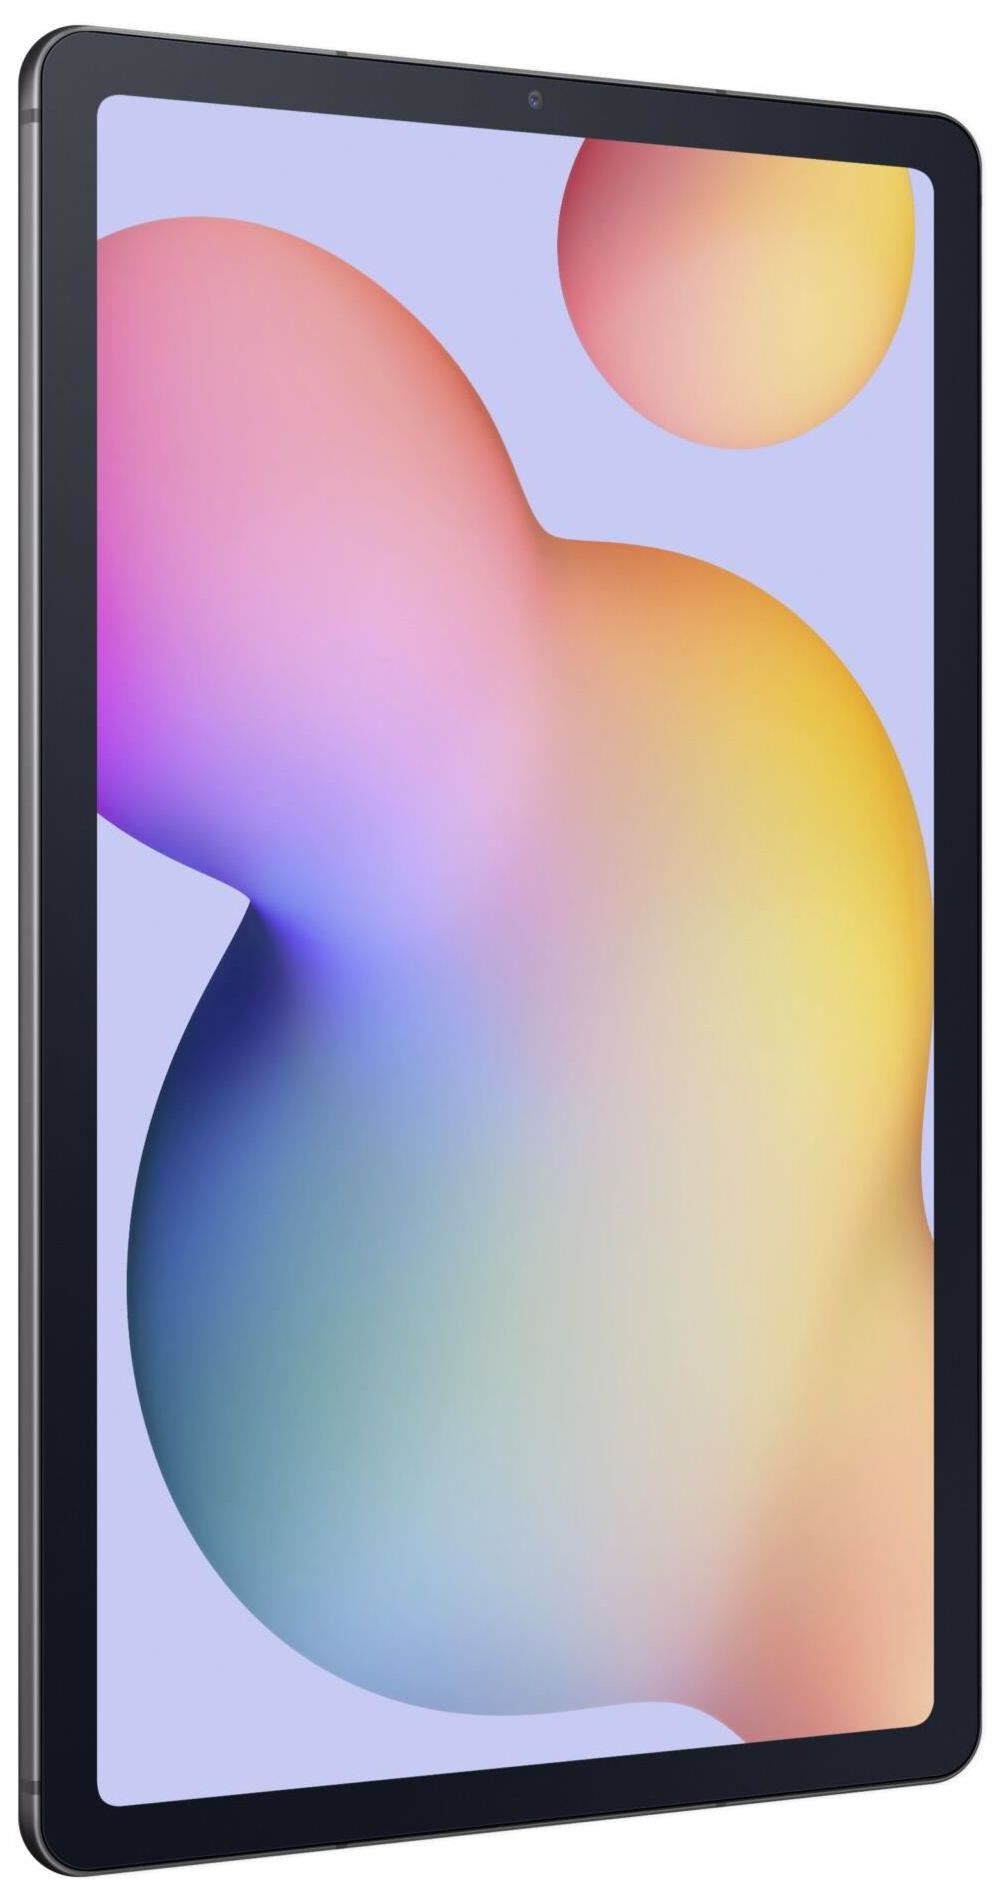 Samsung Galaxy Tab S6 Lite P610N WiFi (DACH) 64GB, Android, gray